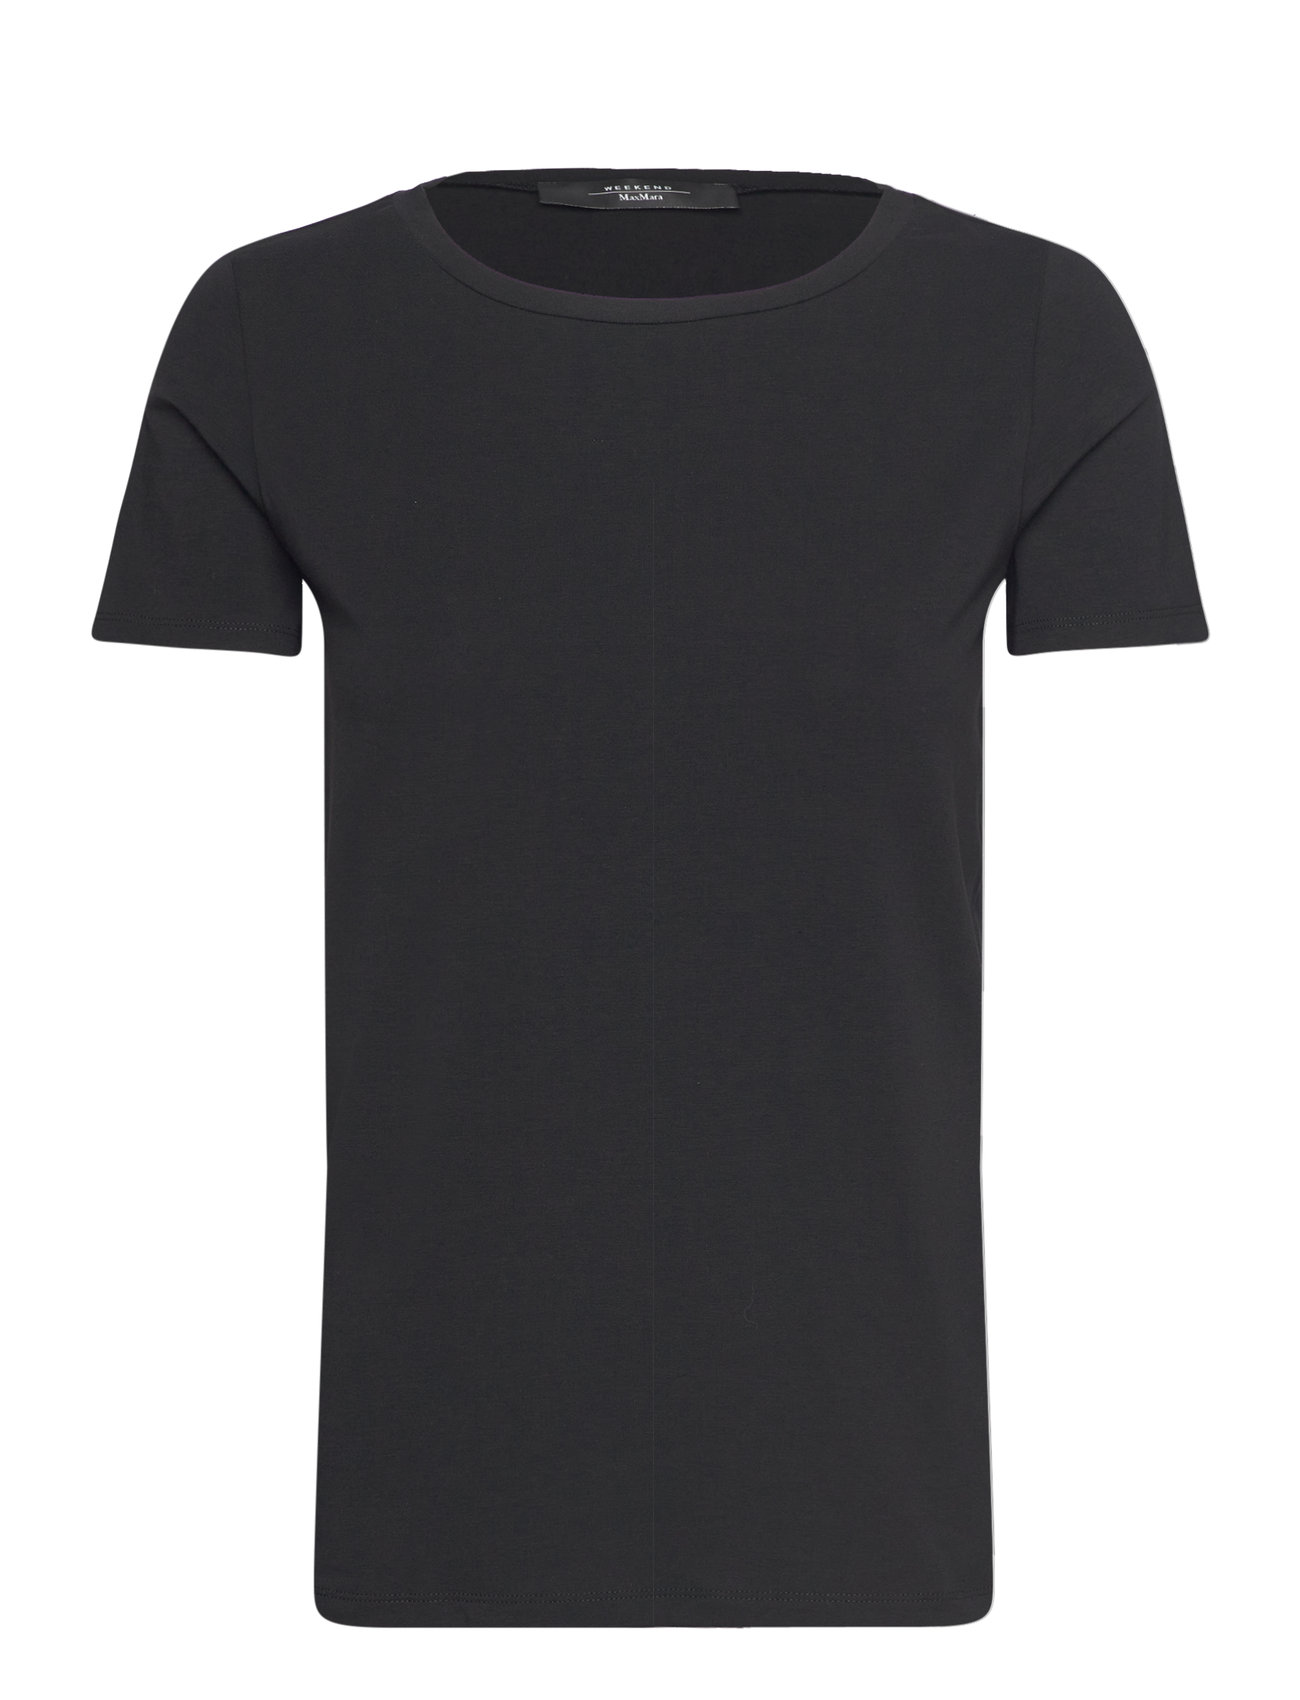 Multib Designers T-shirts & Tops Short-sleeved Black Weekend Max Mara